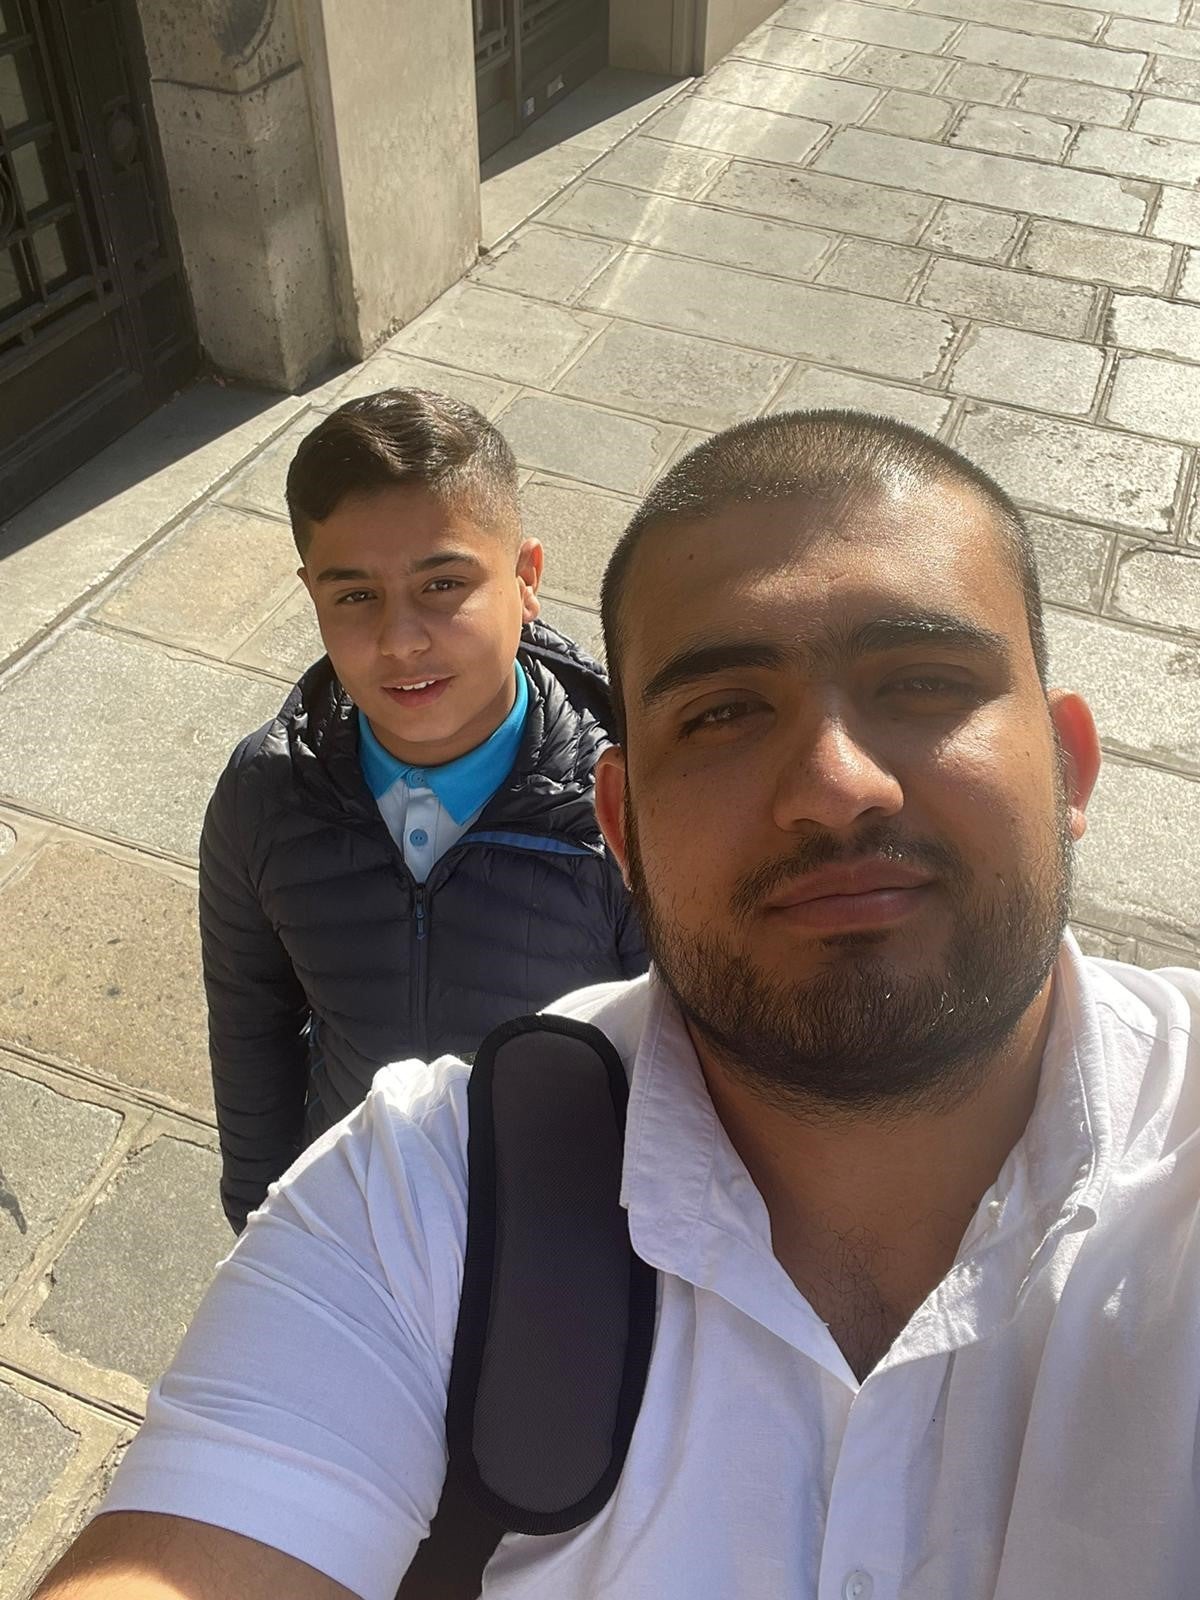 Qamar Jabarkhyl, right, on a visit to see his cousin Obaidullah who is stranded in France (Qamar Jabarkhyl/PA)